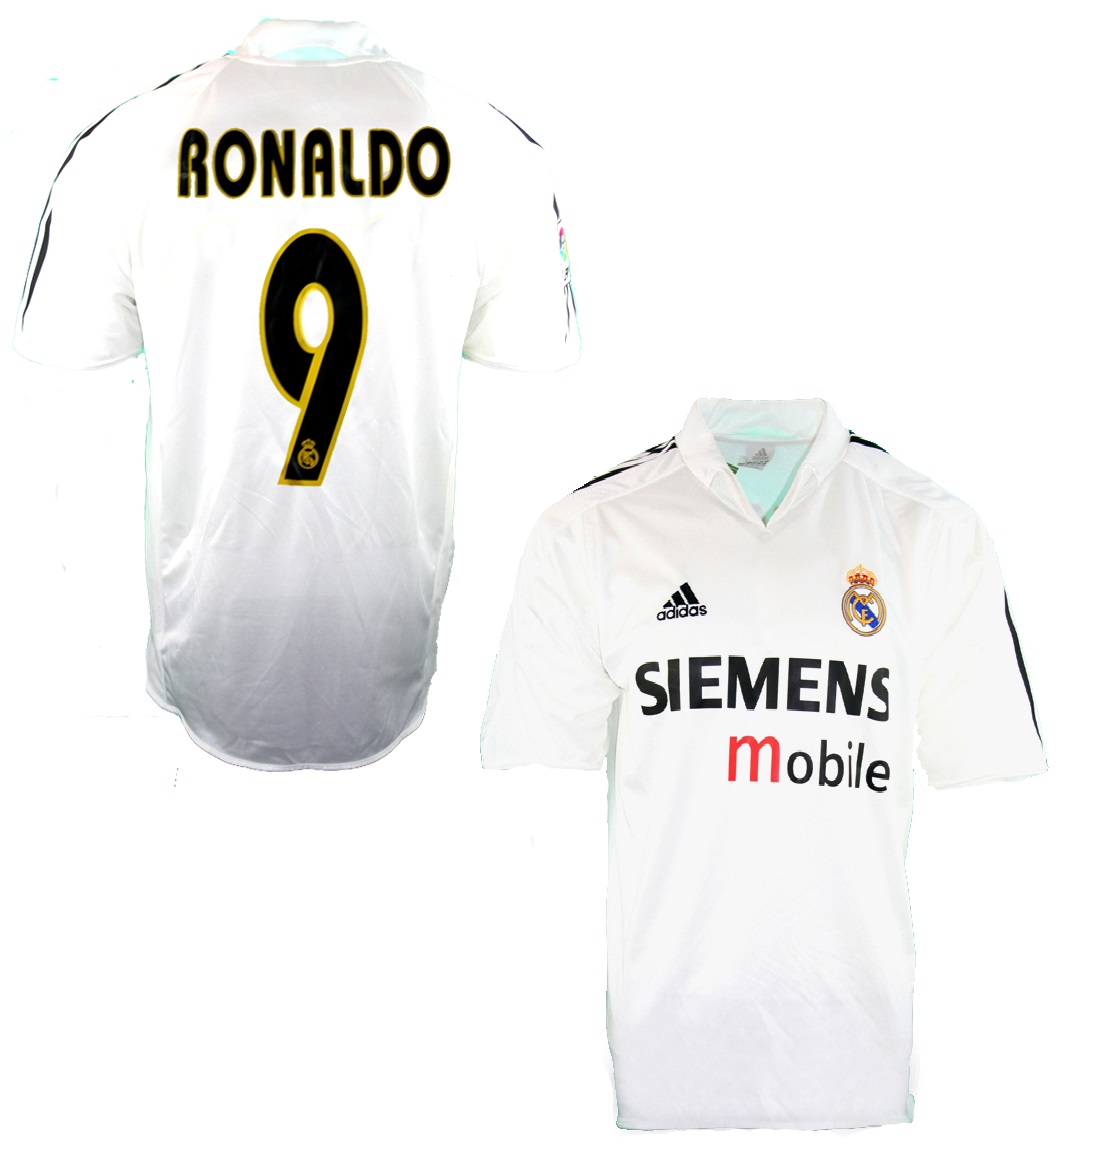 ronaldo 9 jersey